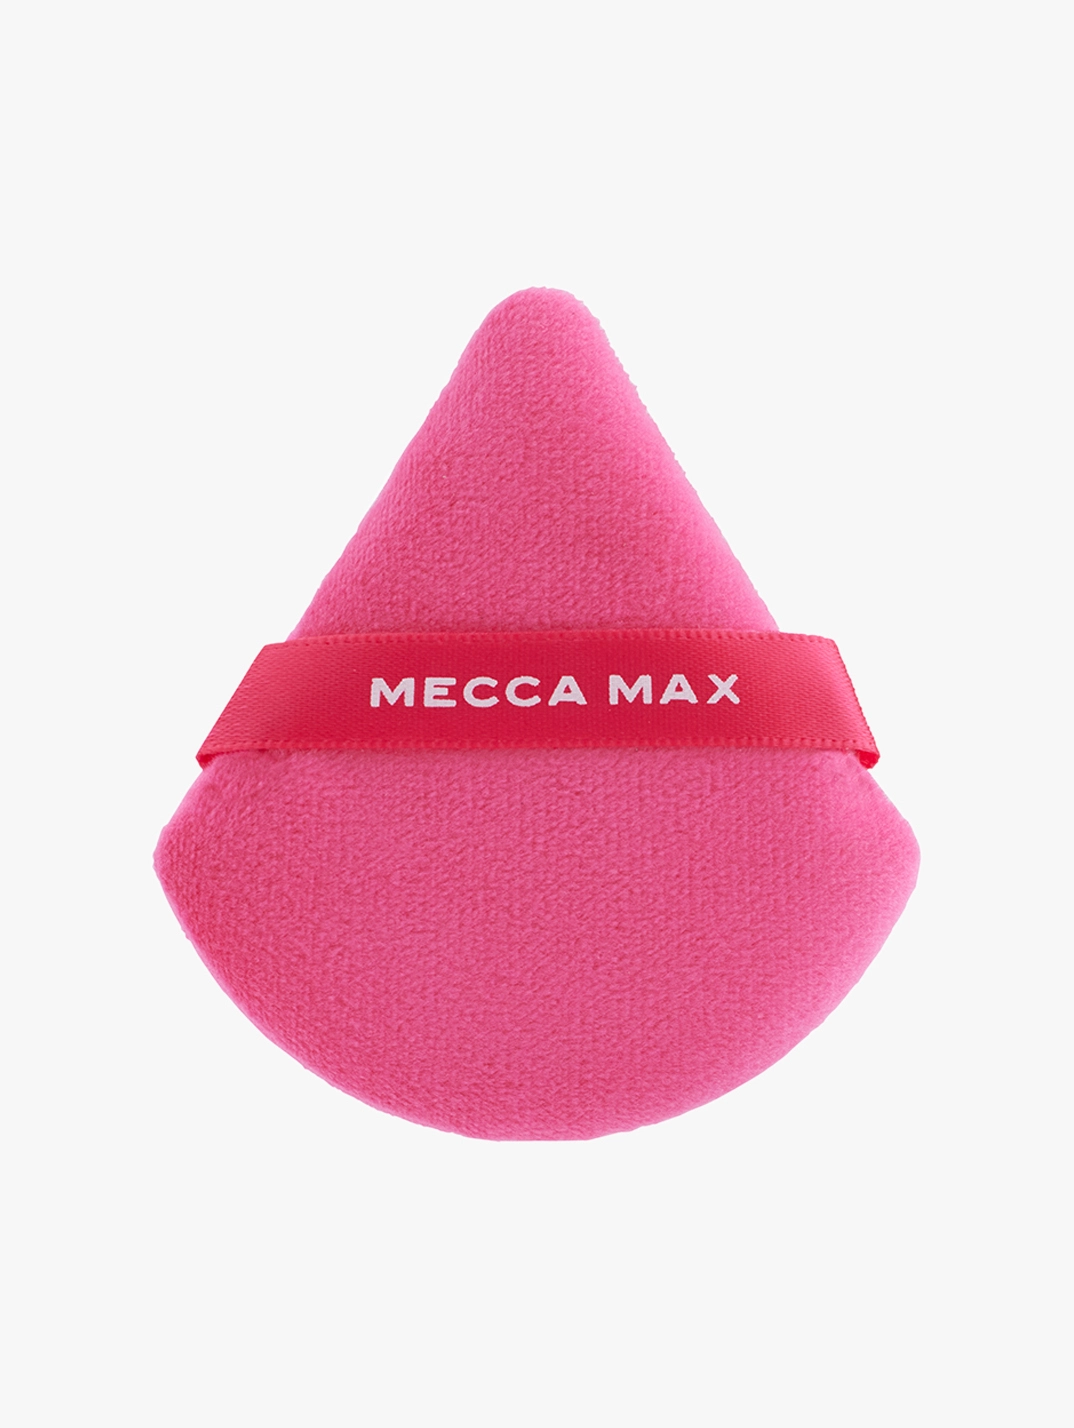 MECCA MAX Triangle Powder Puff